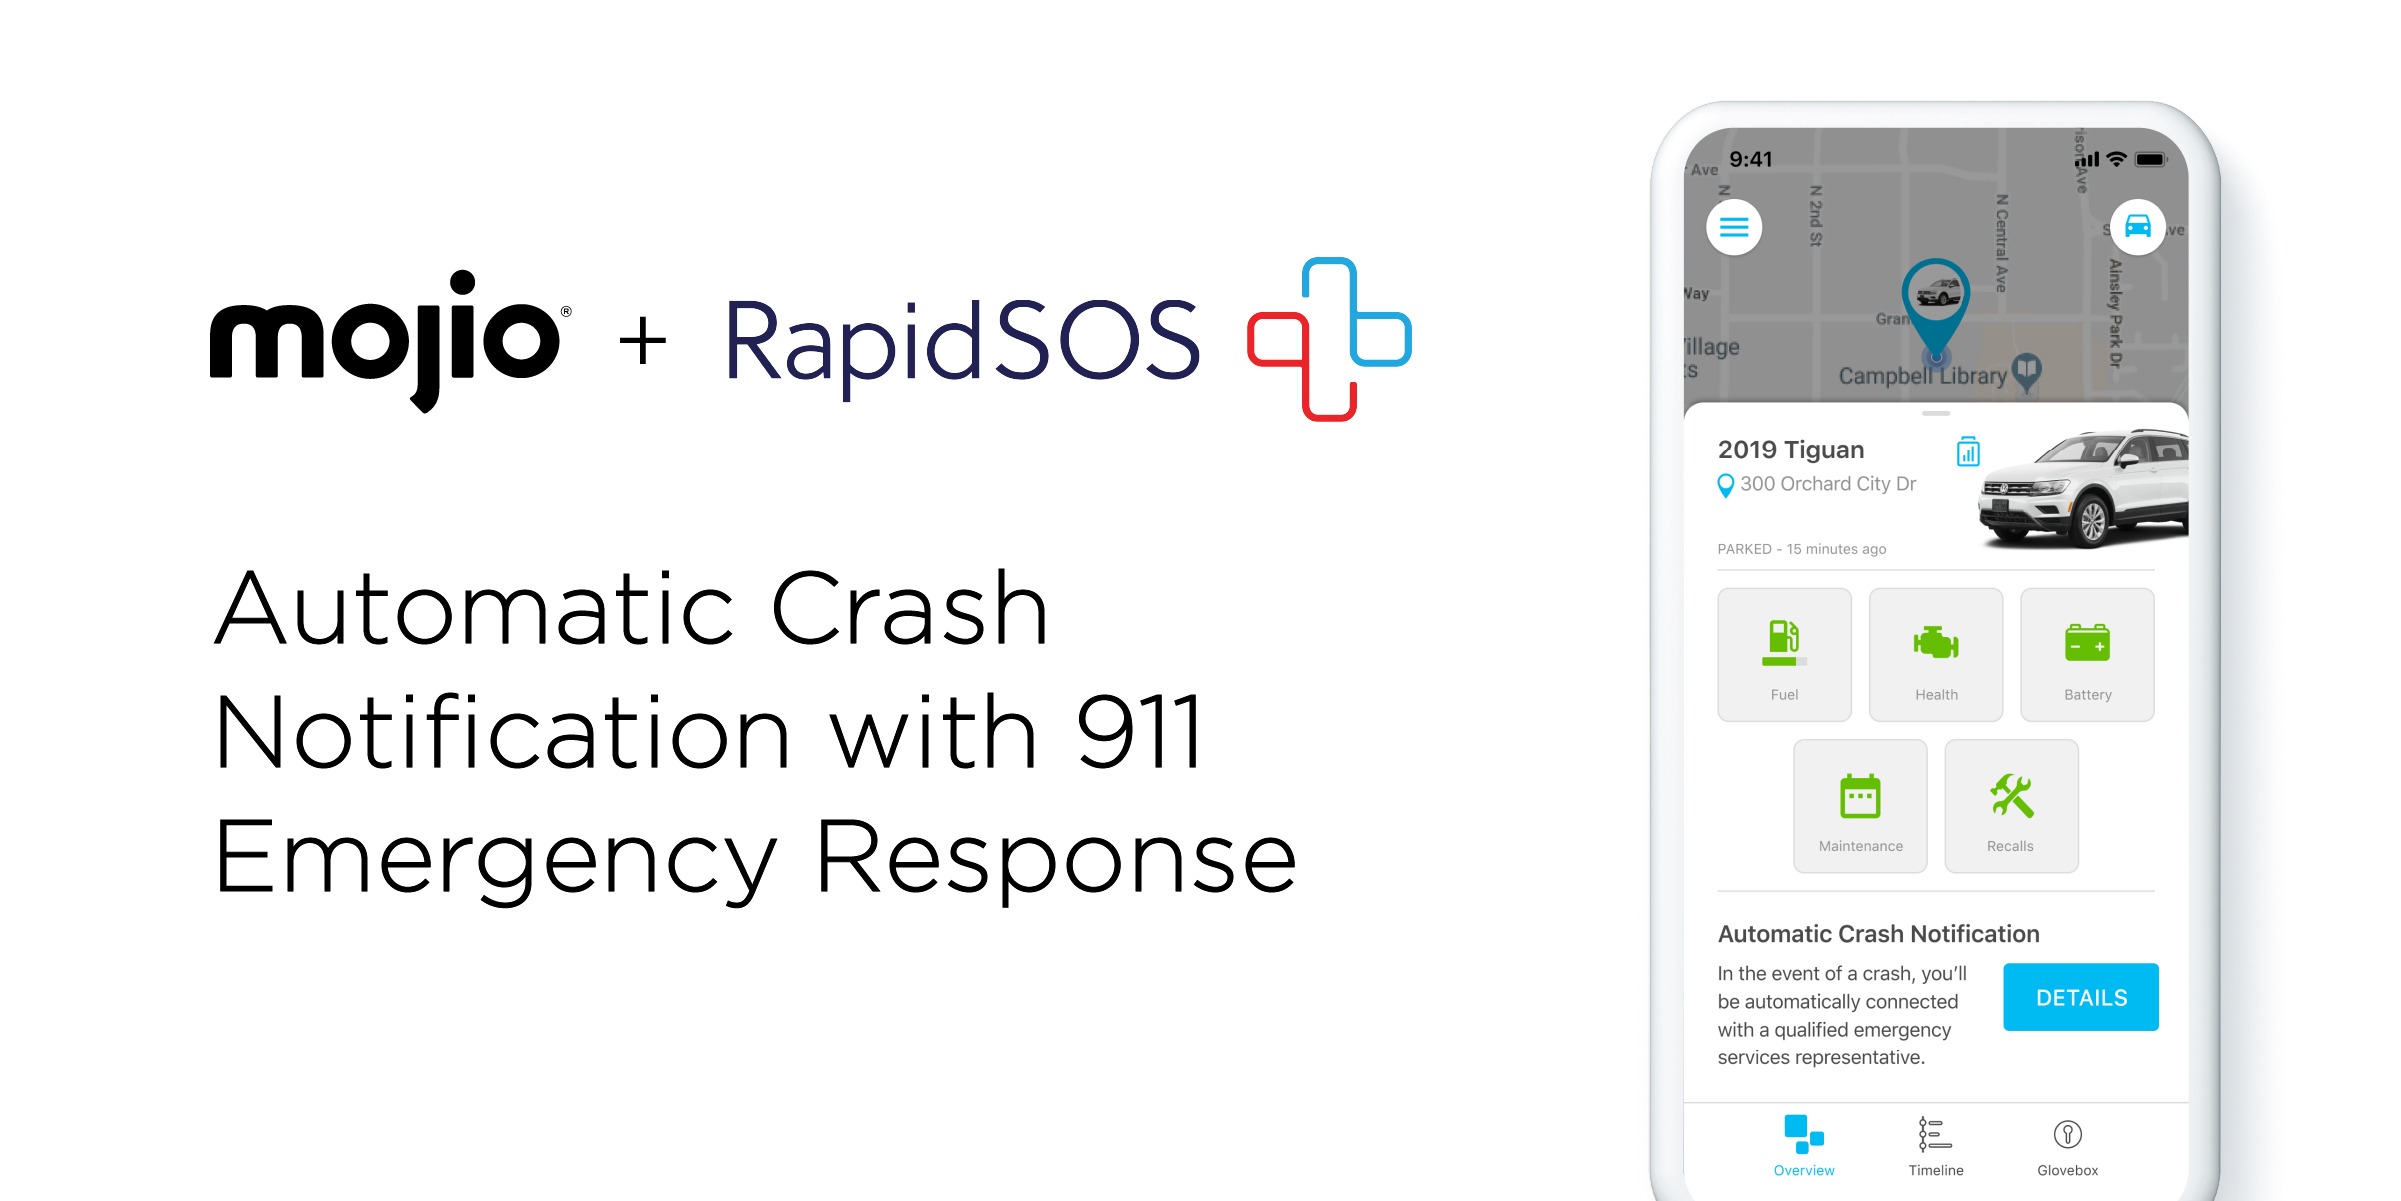 Mojio + RapidSOS. Automatic Crash Notification with 911 Emergency Response.